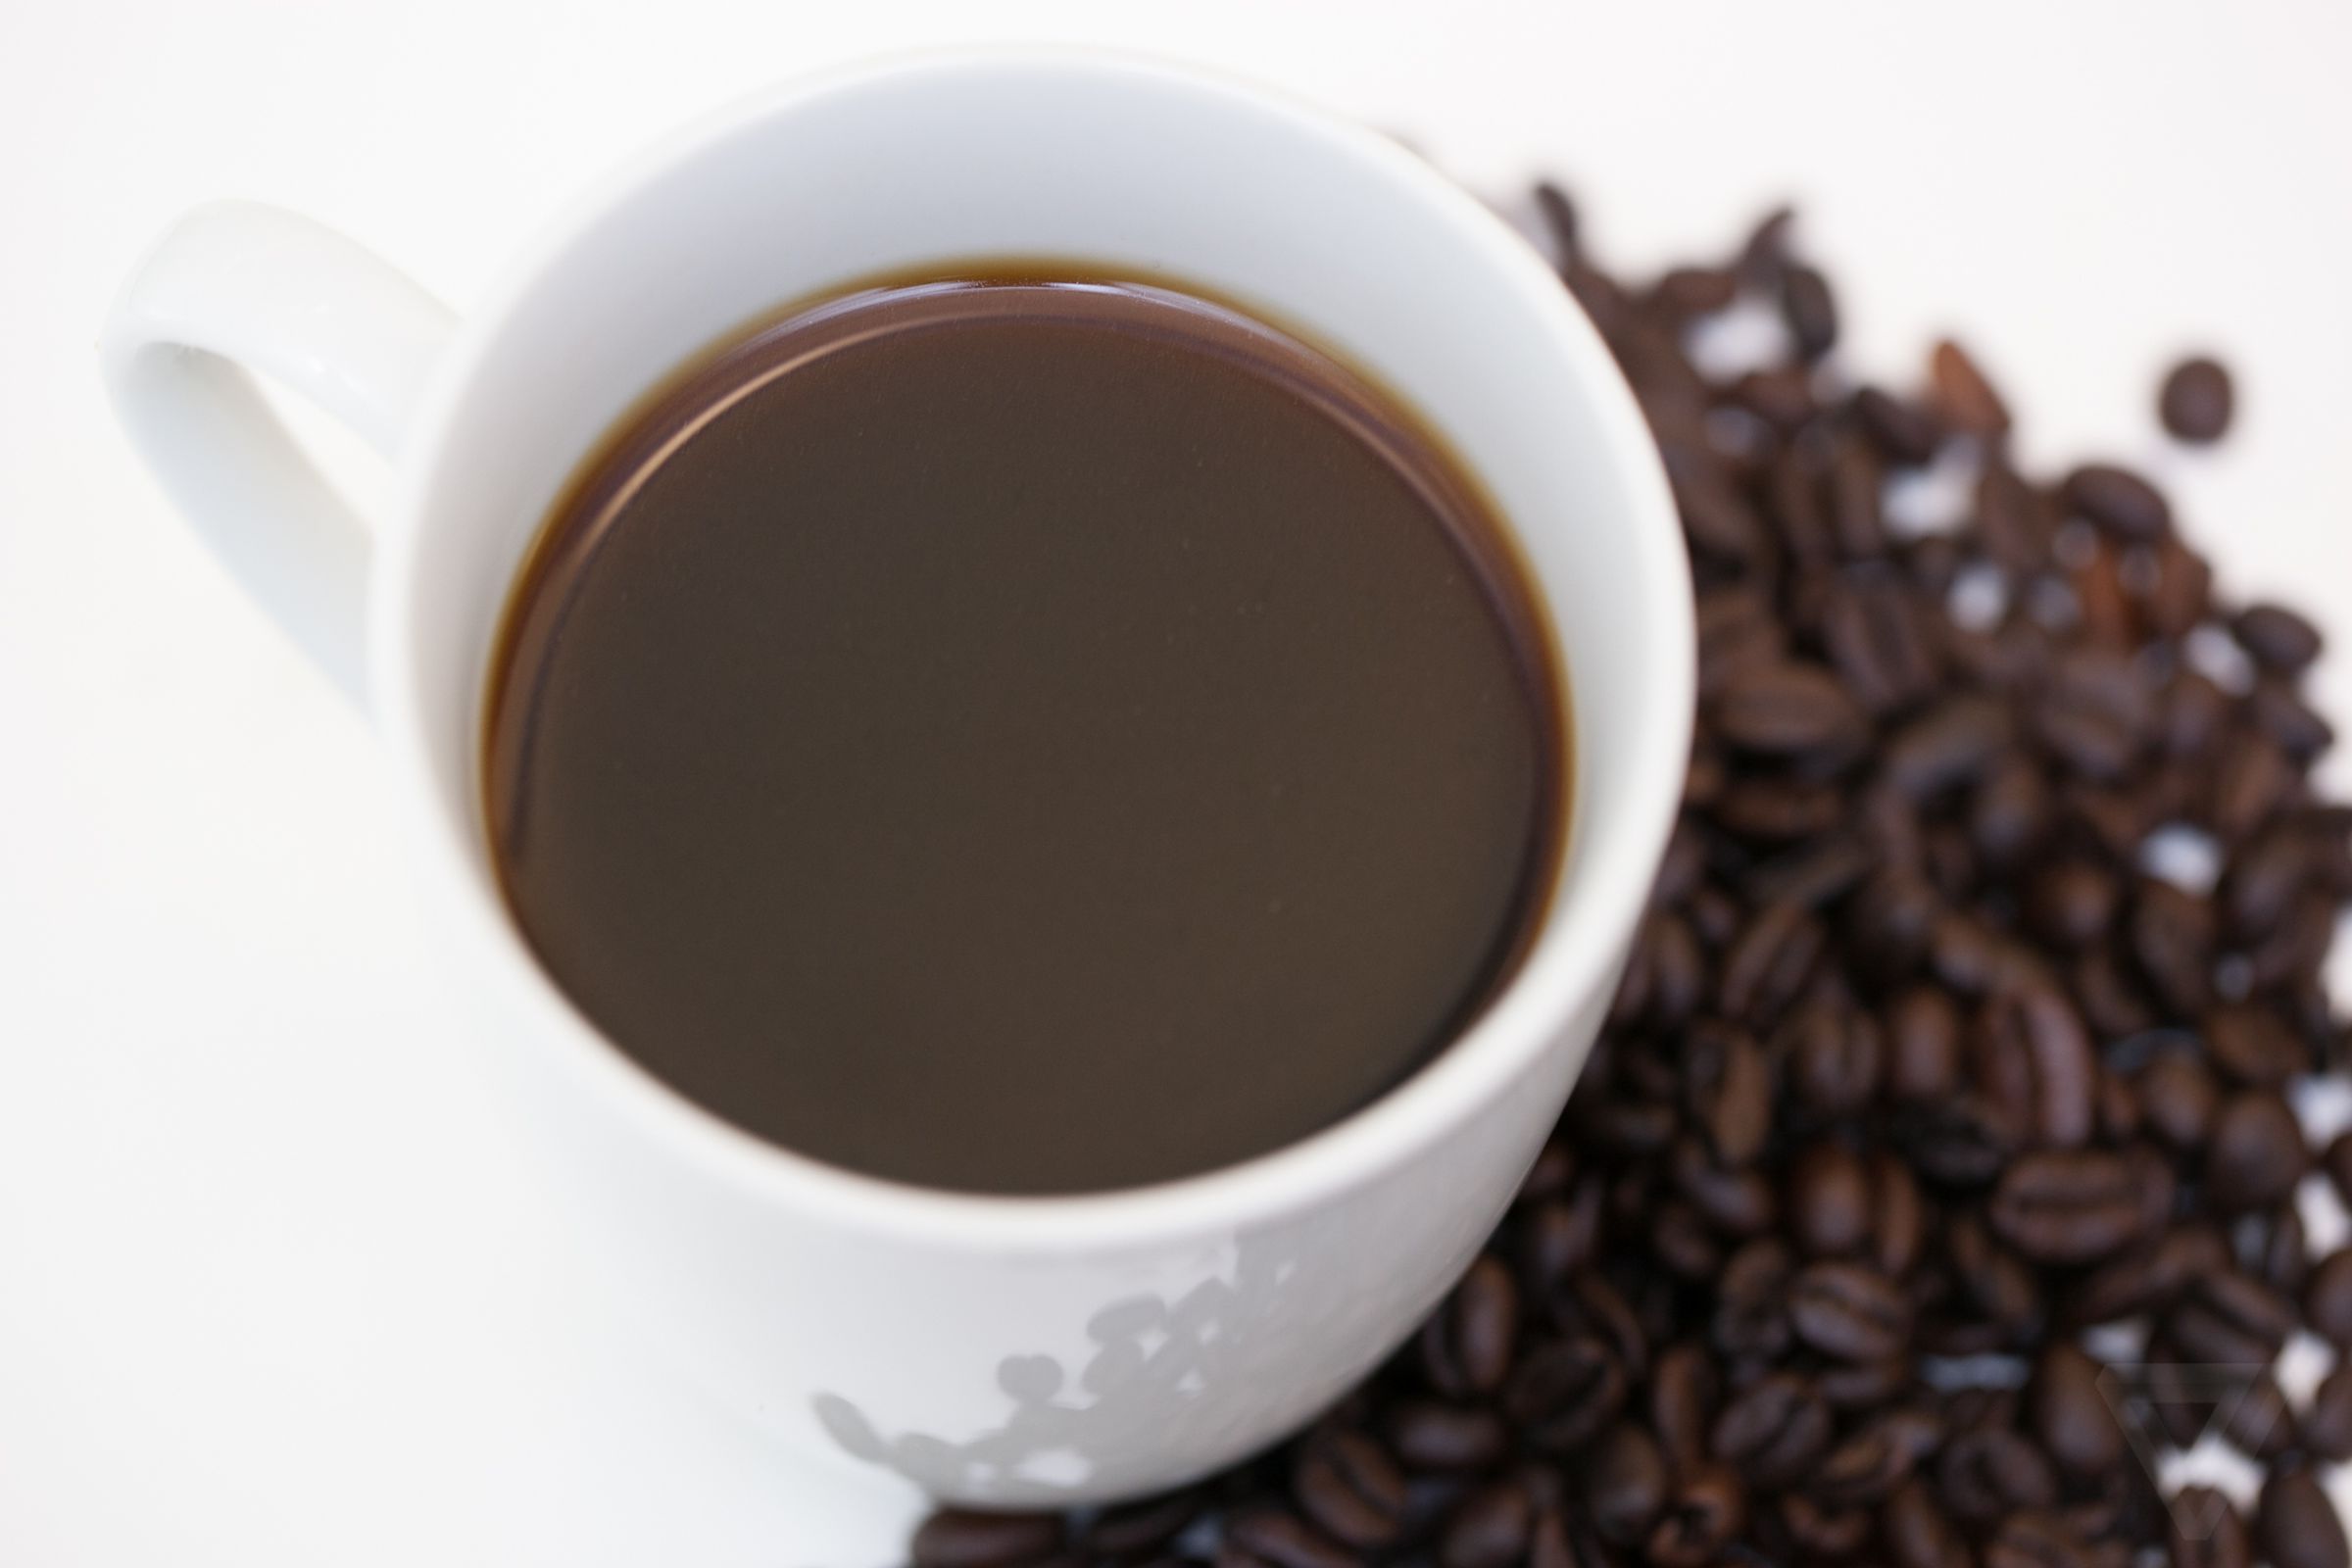  Coffee-caffeine-stock-Jan2016-verge-03